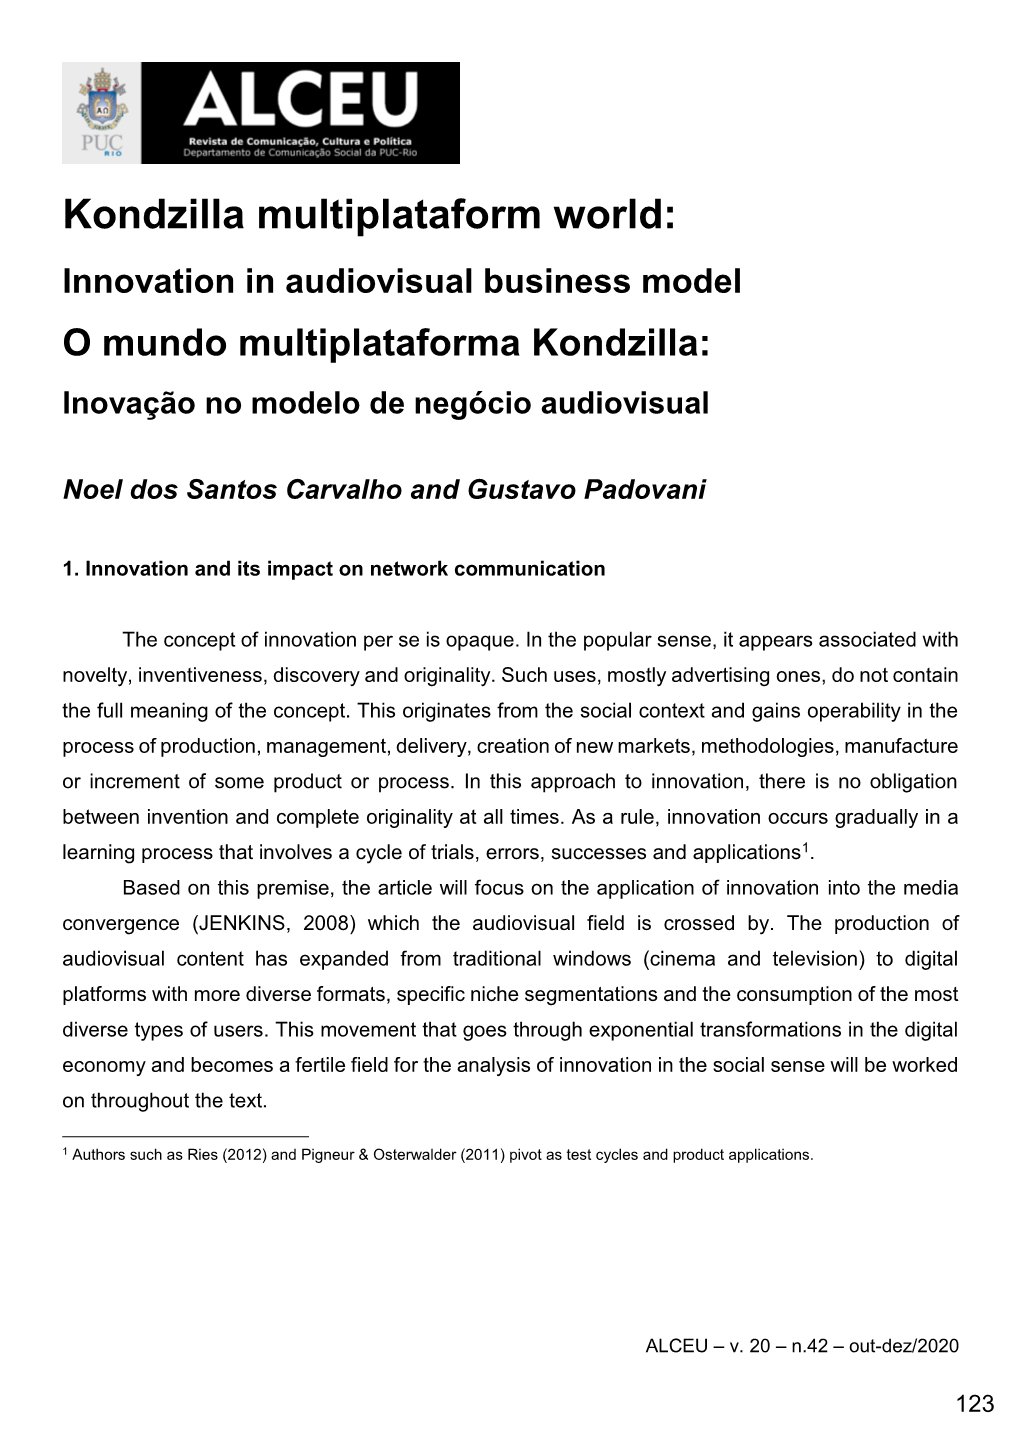 Kondzilla Multiplataform World: Innovation in Audiovisual Business Model O Mundo Multiplataforma Kondzilla: Inovação No Modelo De Negócio Audiovisual